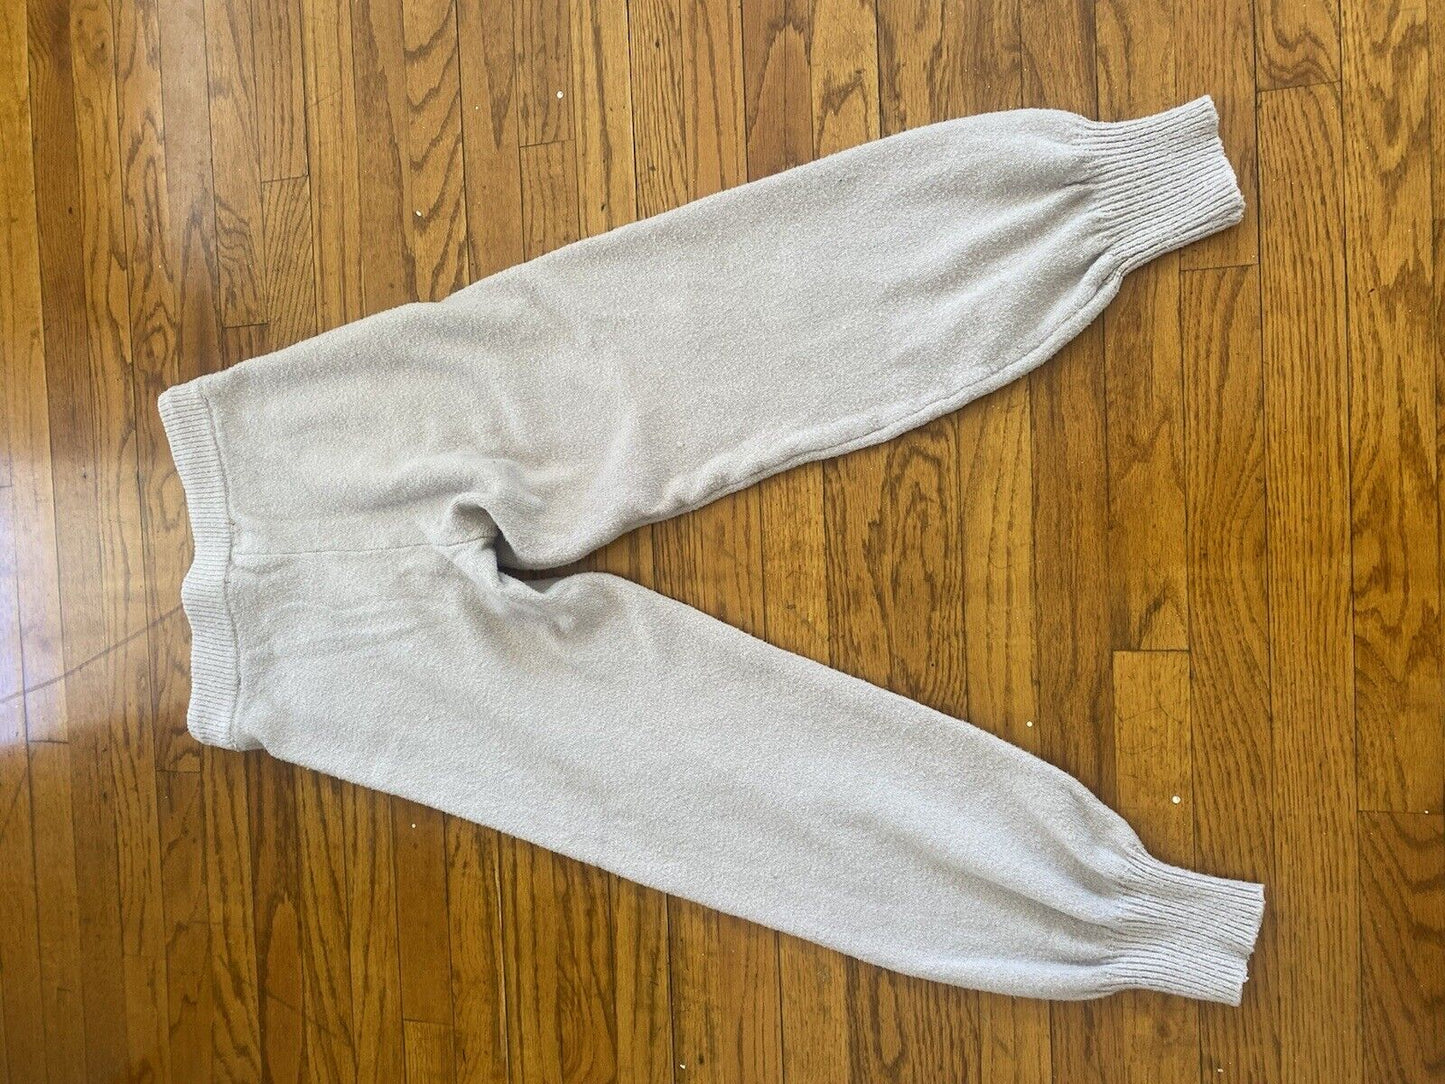 White Knit Sweatpants - Free Assembly - Women’s XS